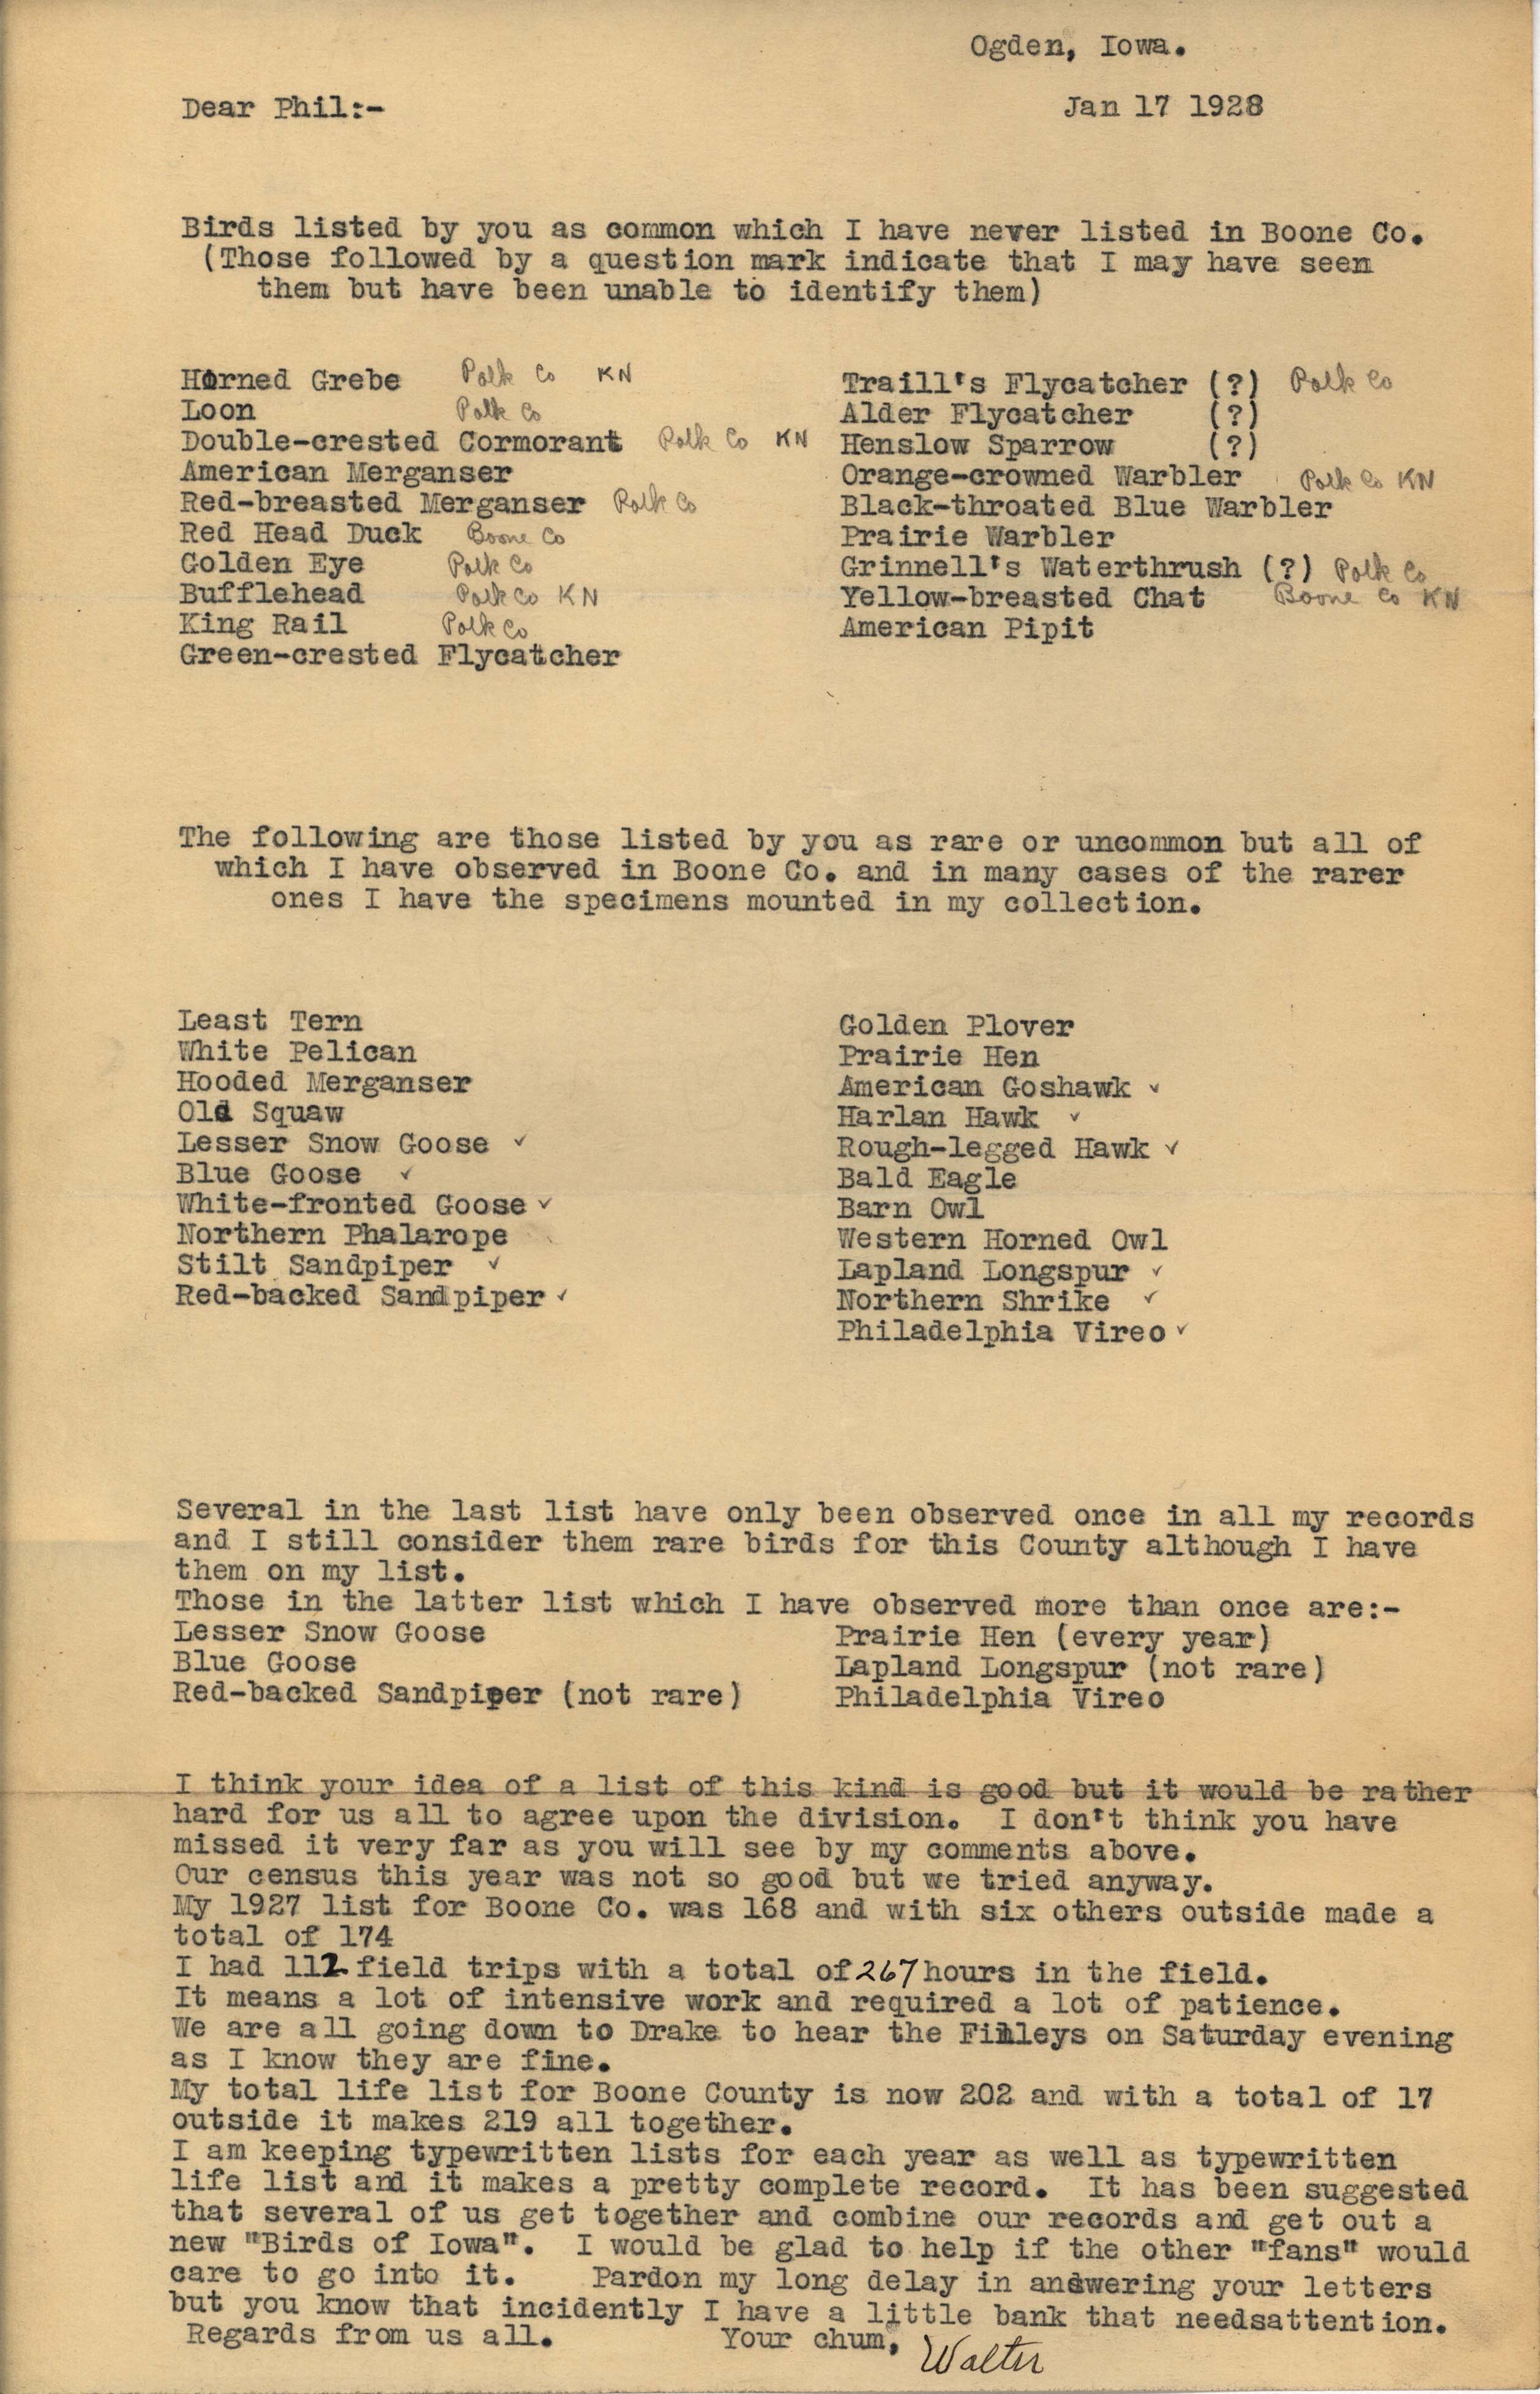 Walter Rosene letter to Philip DuMont regarding creating a new Birds of Iowa list, January 17, 1928